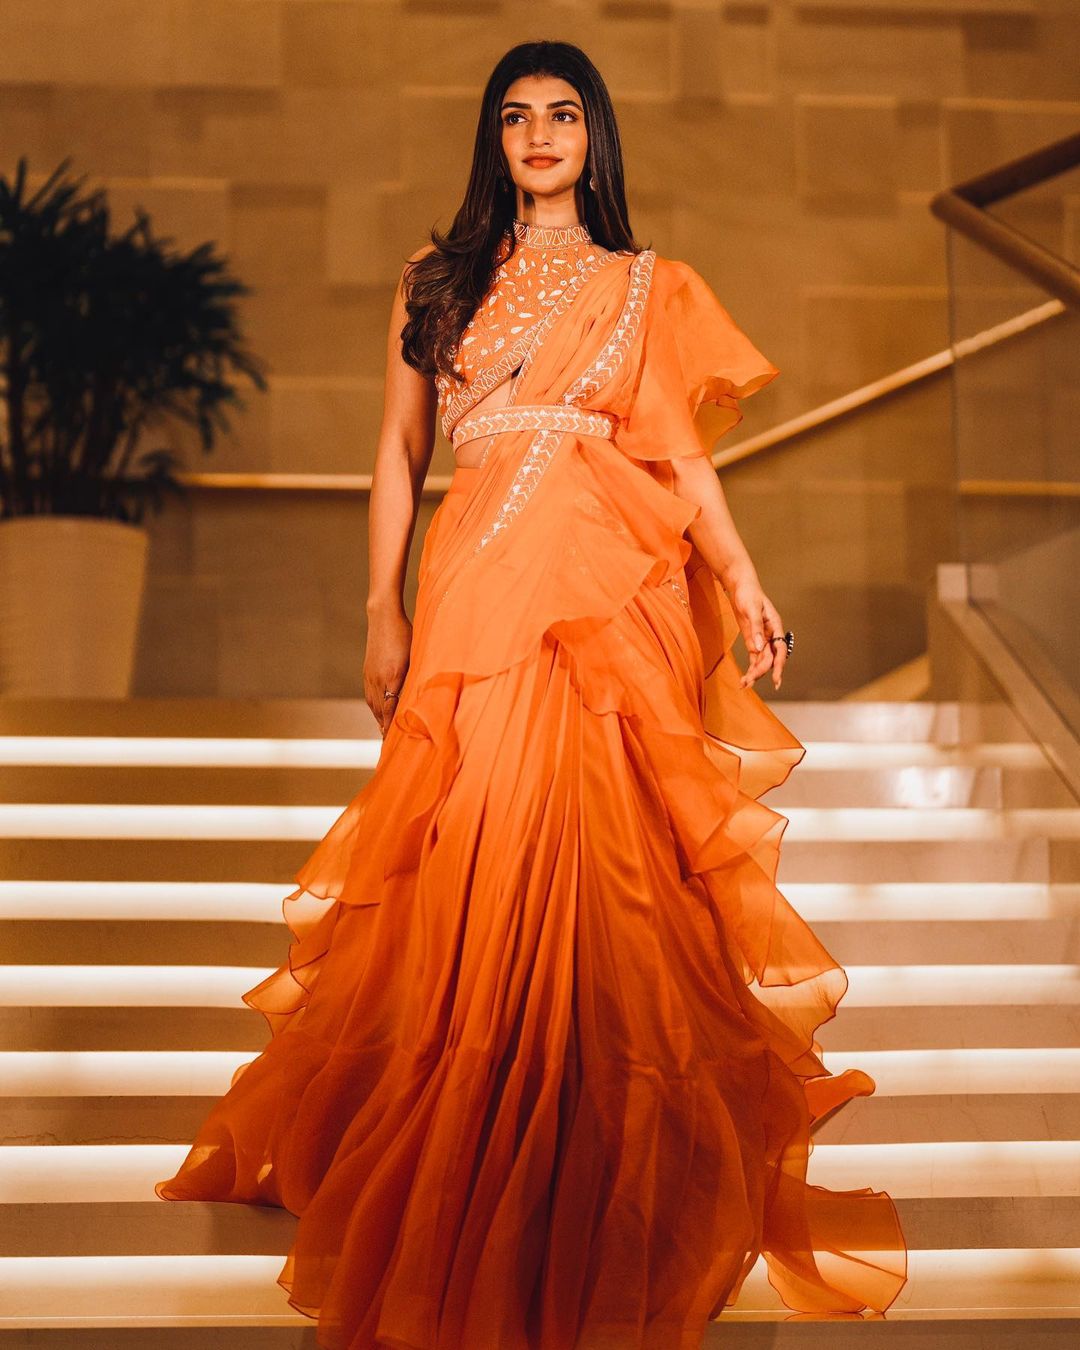 Sreeleela Look Beautiful In Orange Ruffle Saree Sreeleela Beautiful and Elegant Outfit Looks